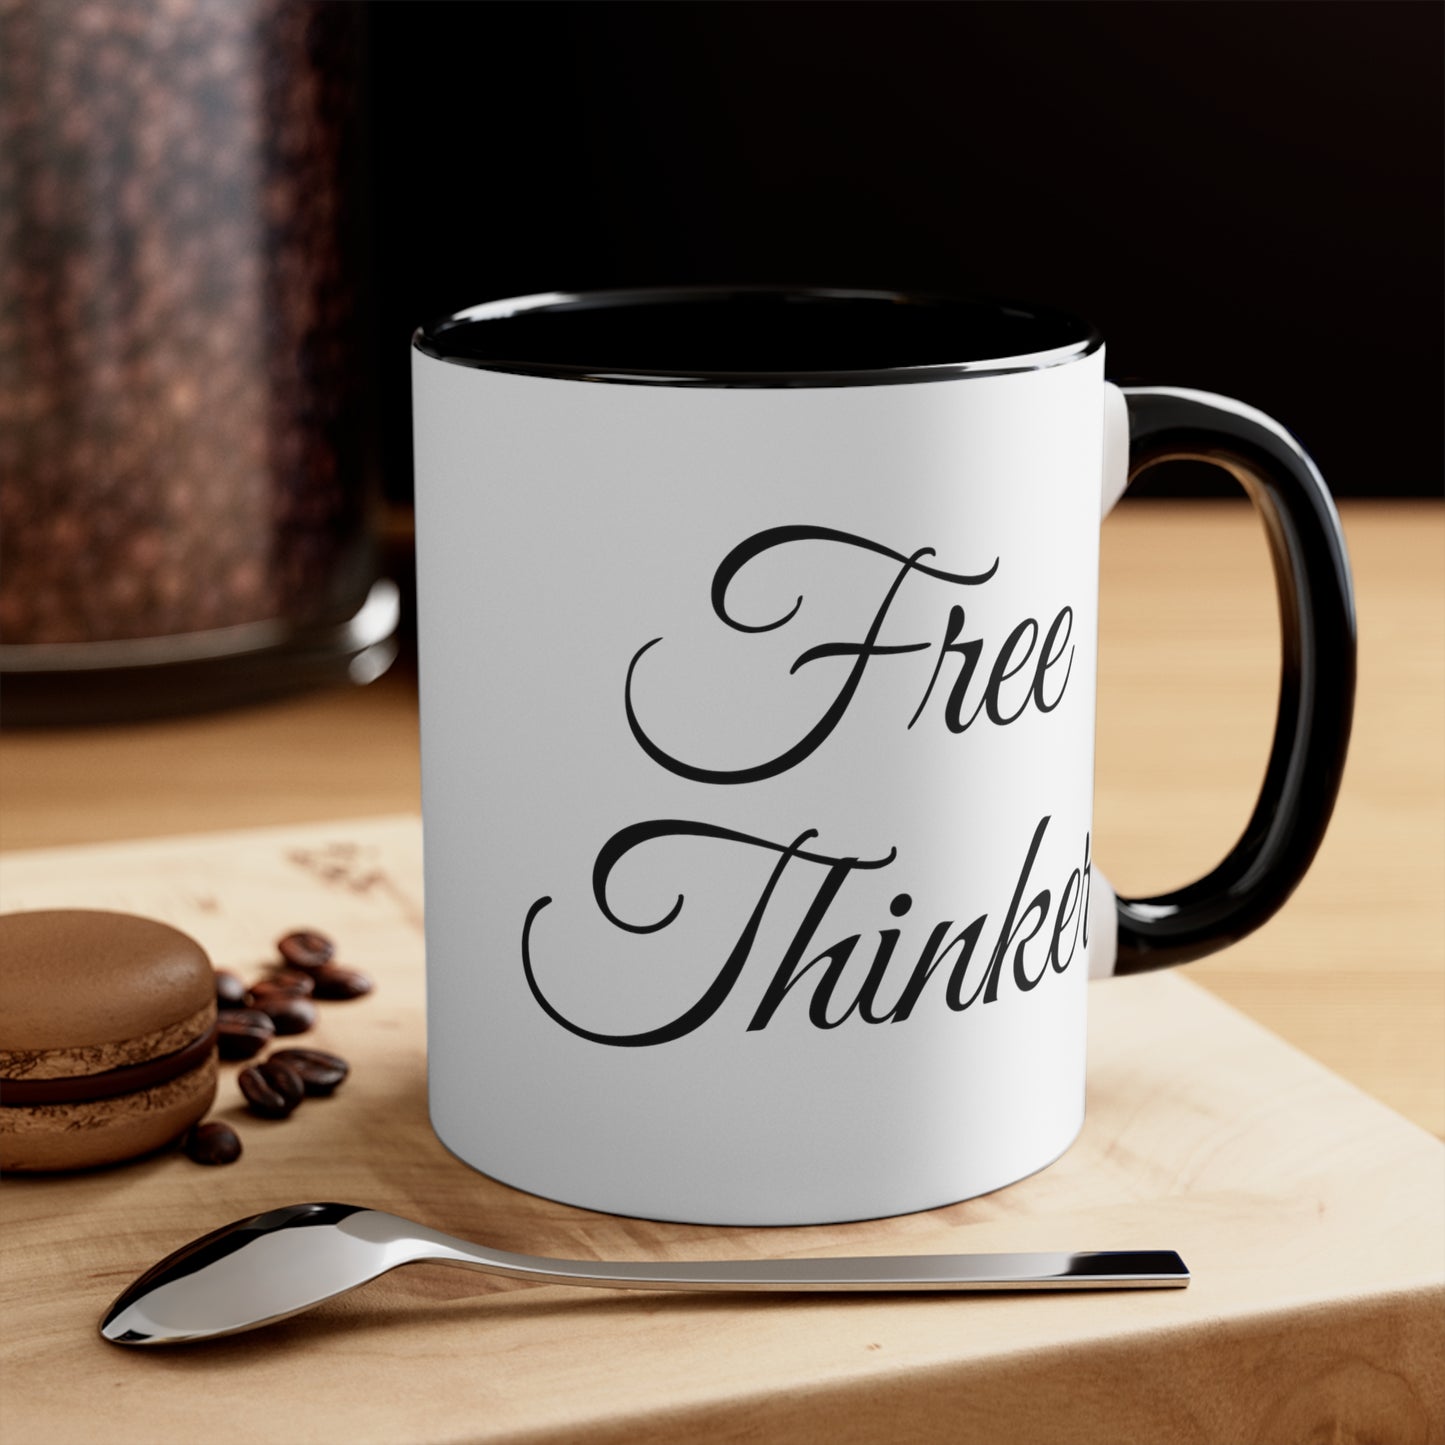 Free Thinker Mug. Republican Mug. Conservative Mug. Conservative Gifts. Republican Gifts. American Patriot Mug. - News For Reasonable People